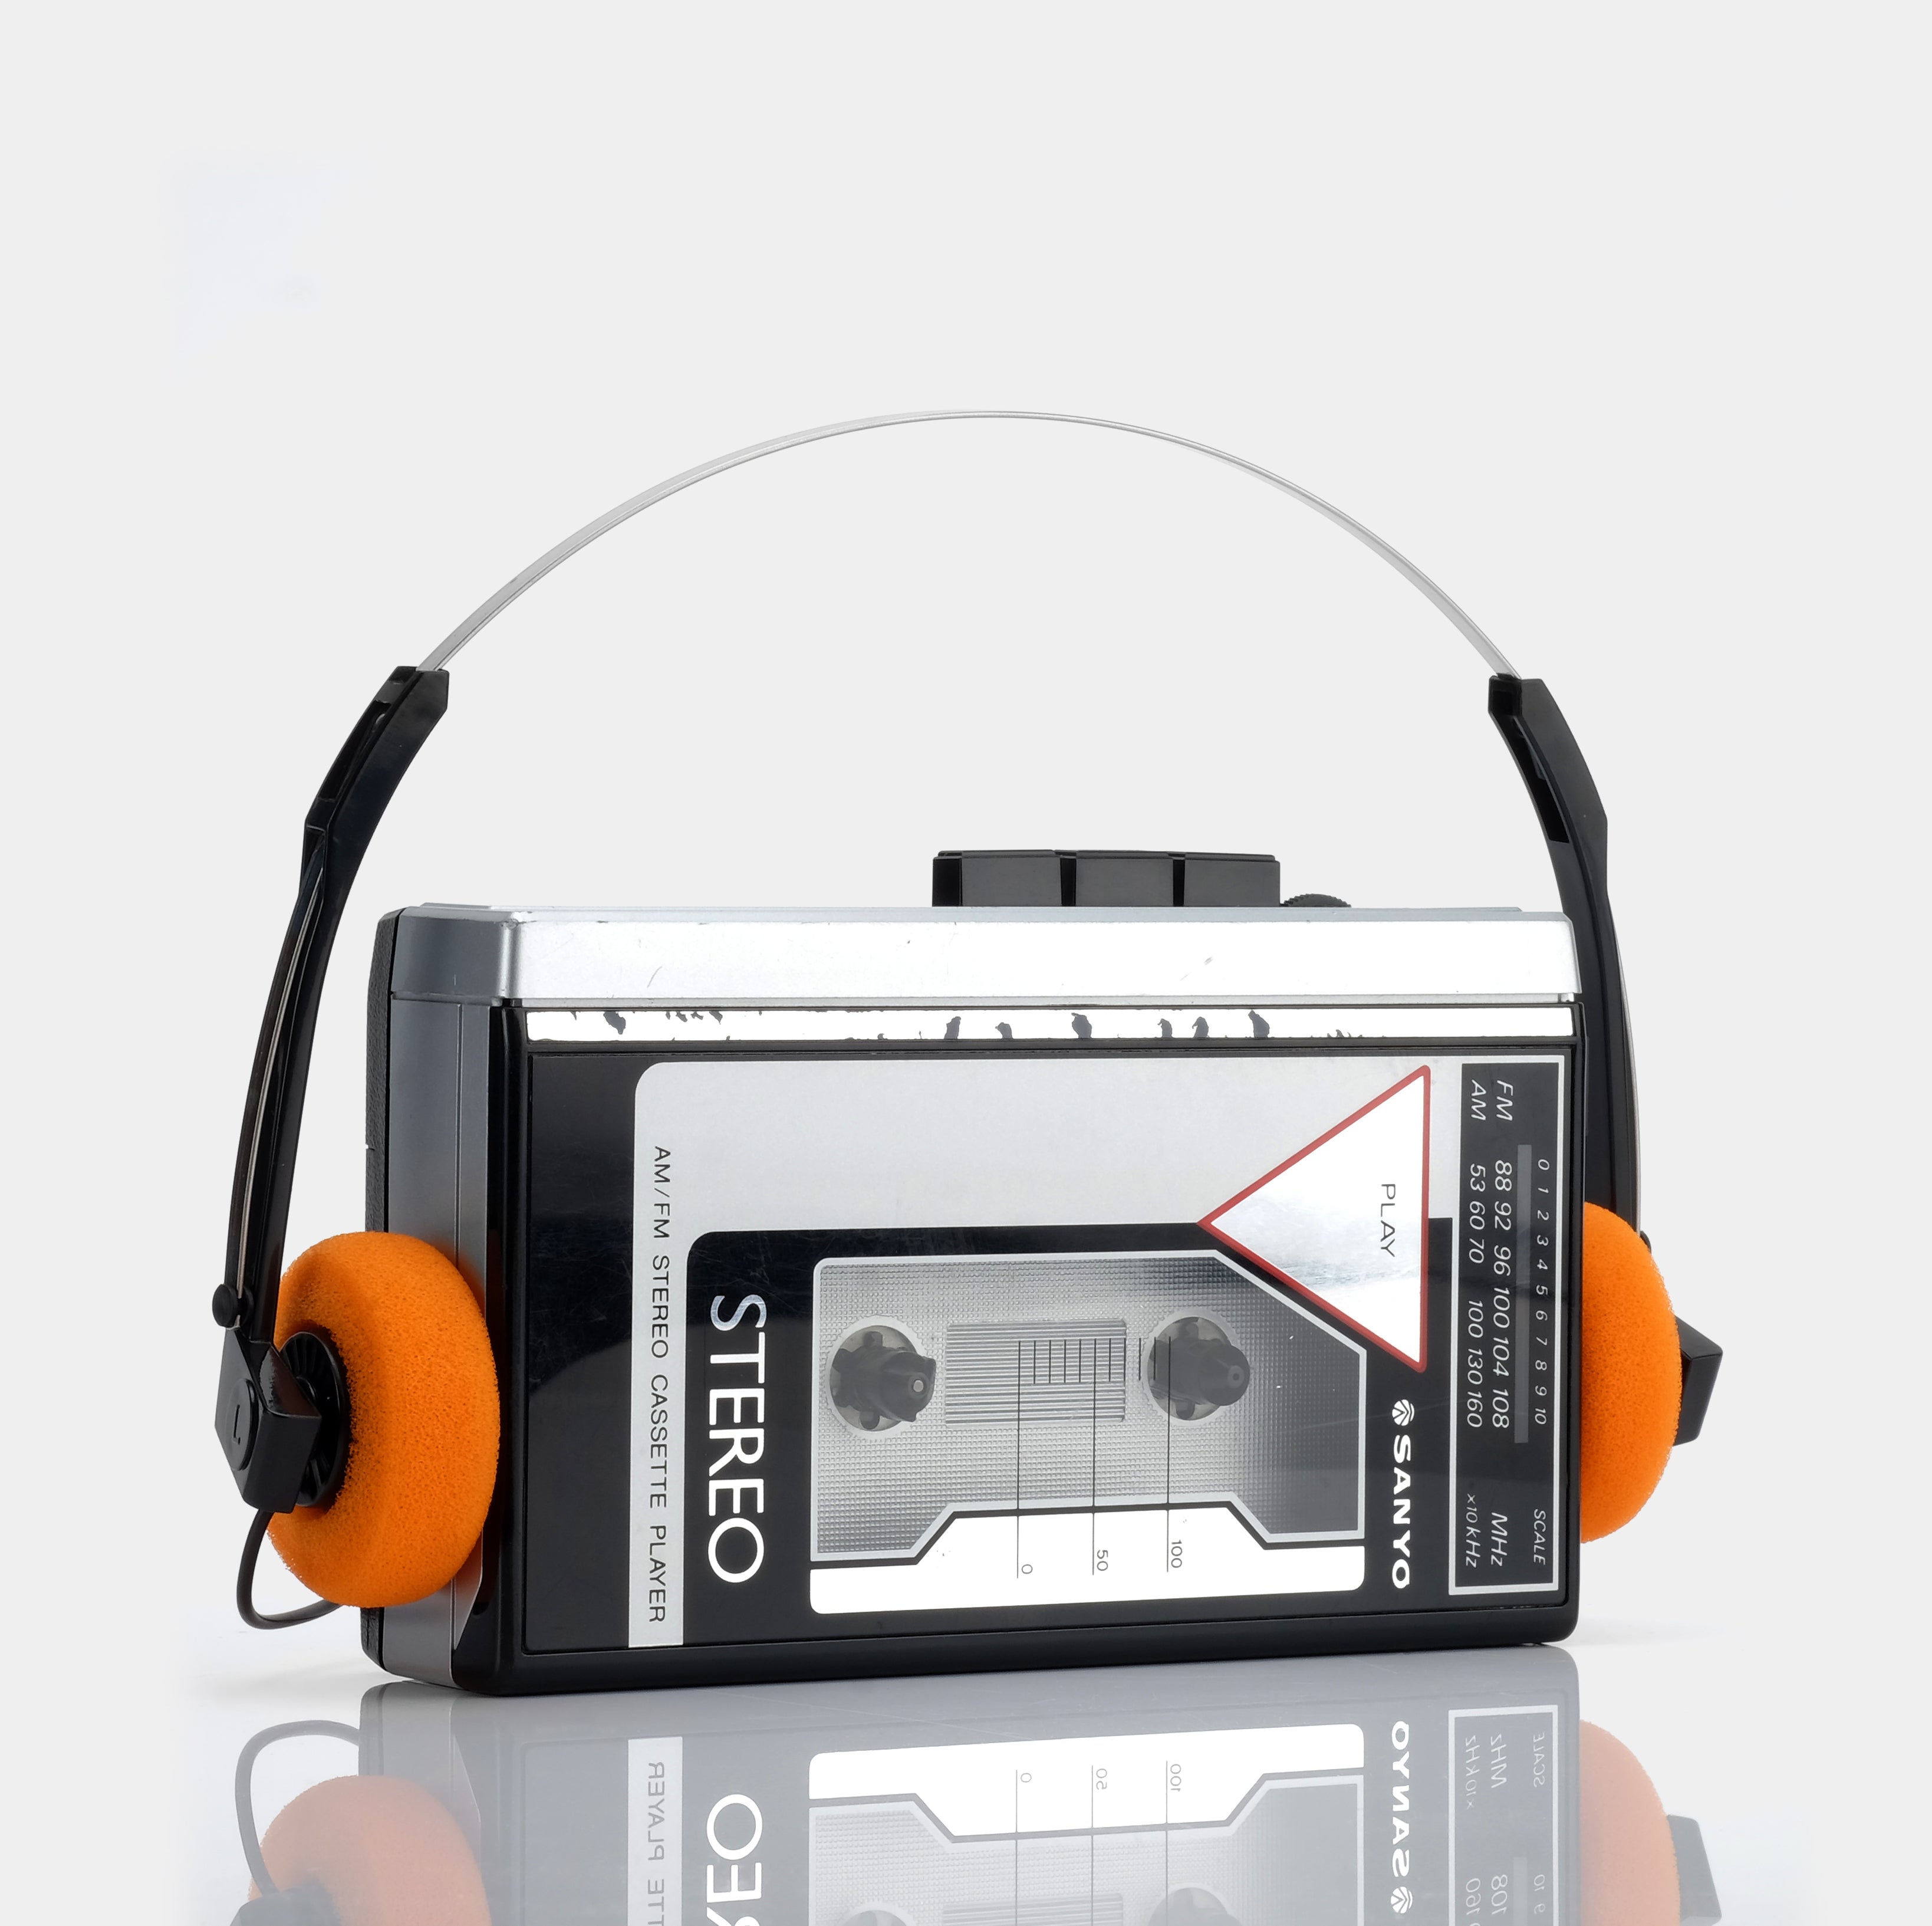 Frikistation - 🔈🔊Radio Cassette Player SANYO AM FM Stereo